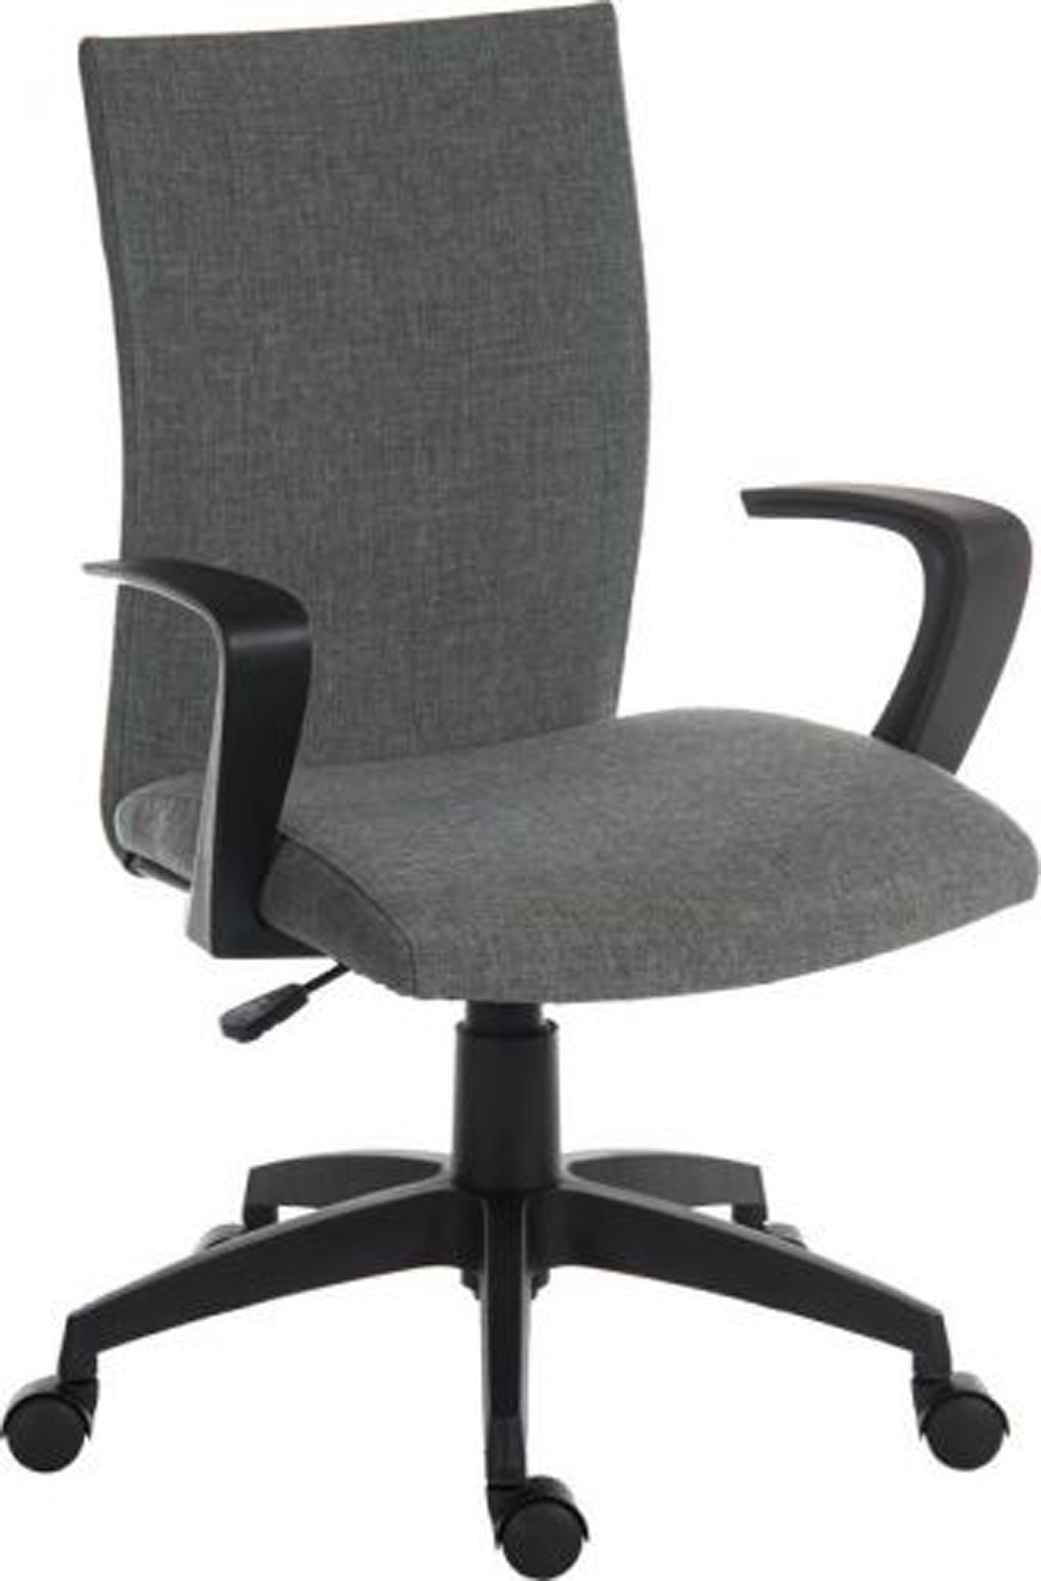 Student Work Chair - Grey